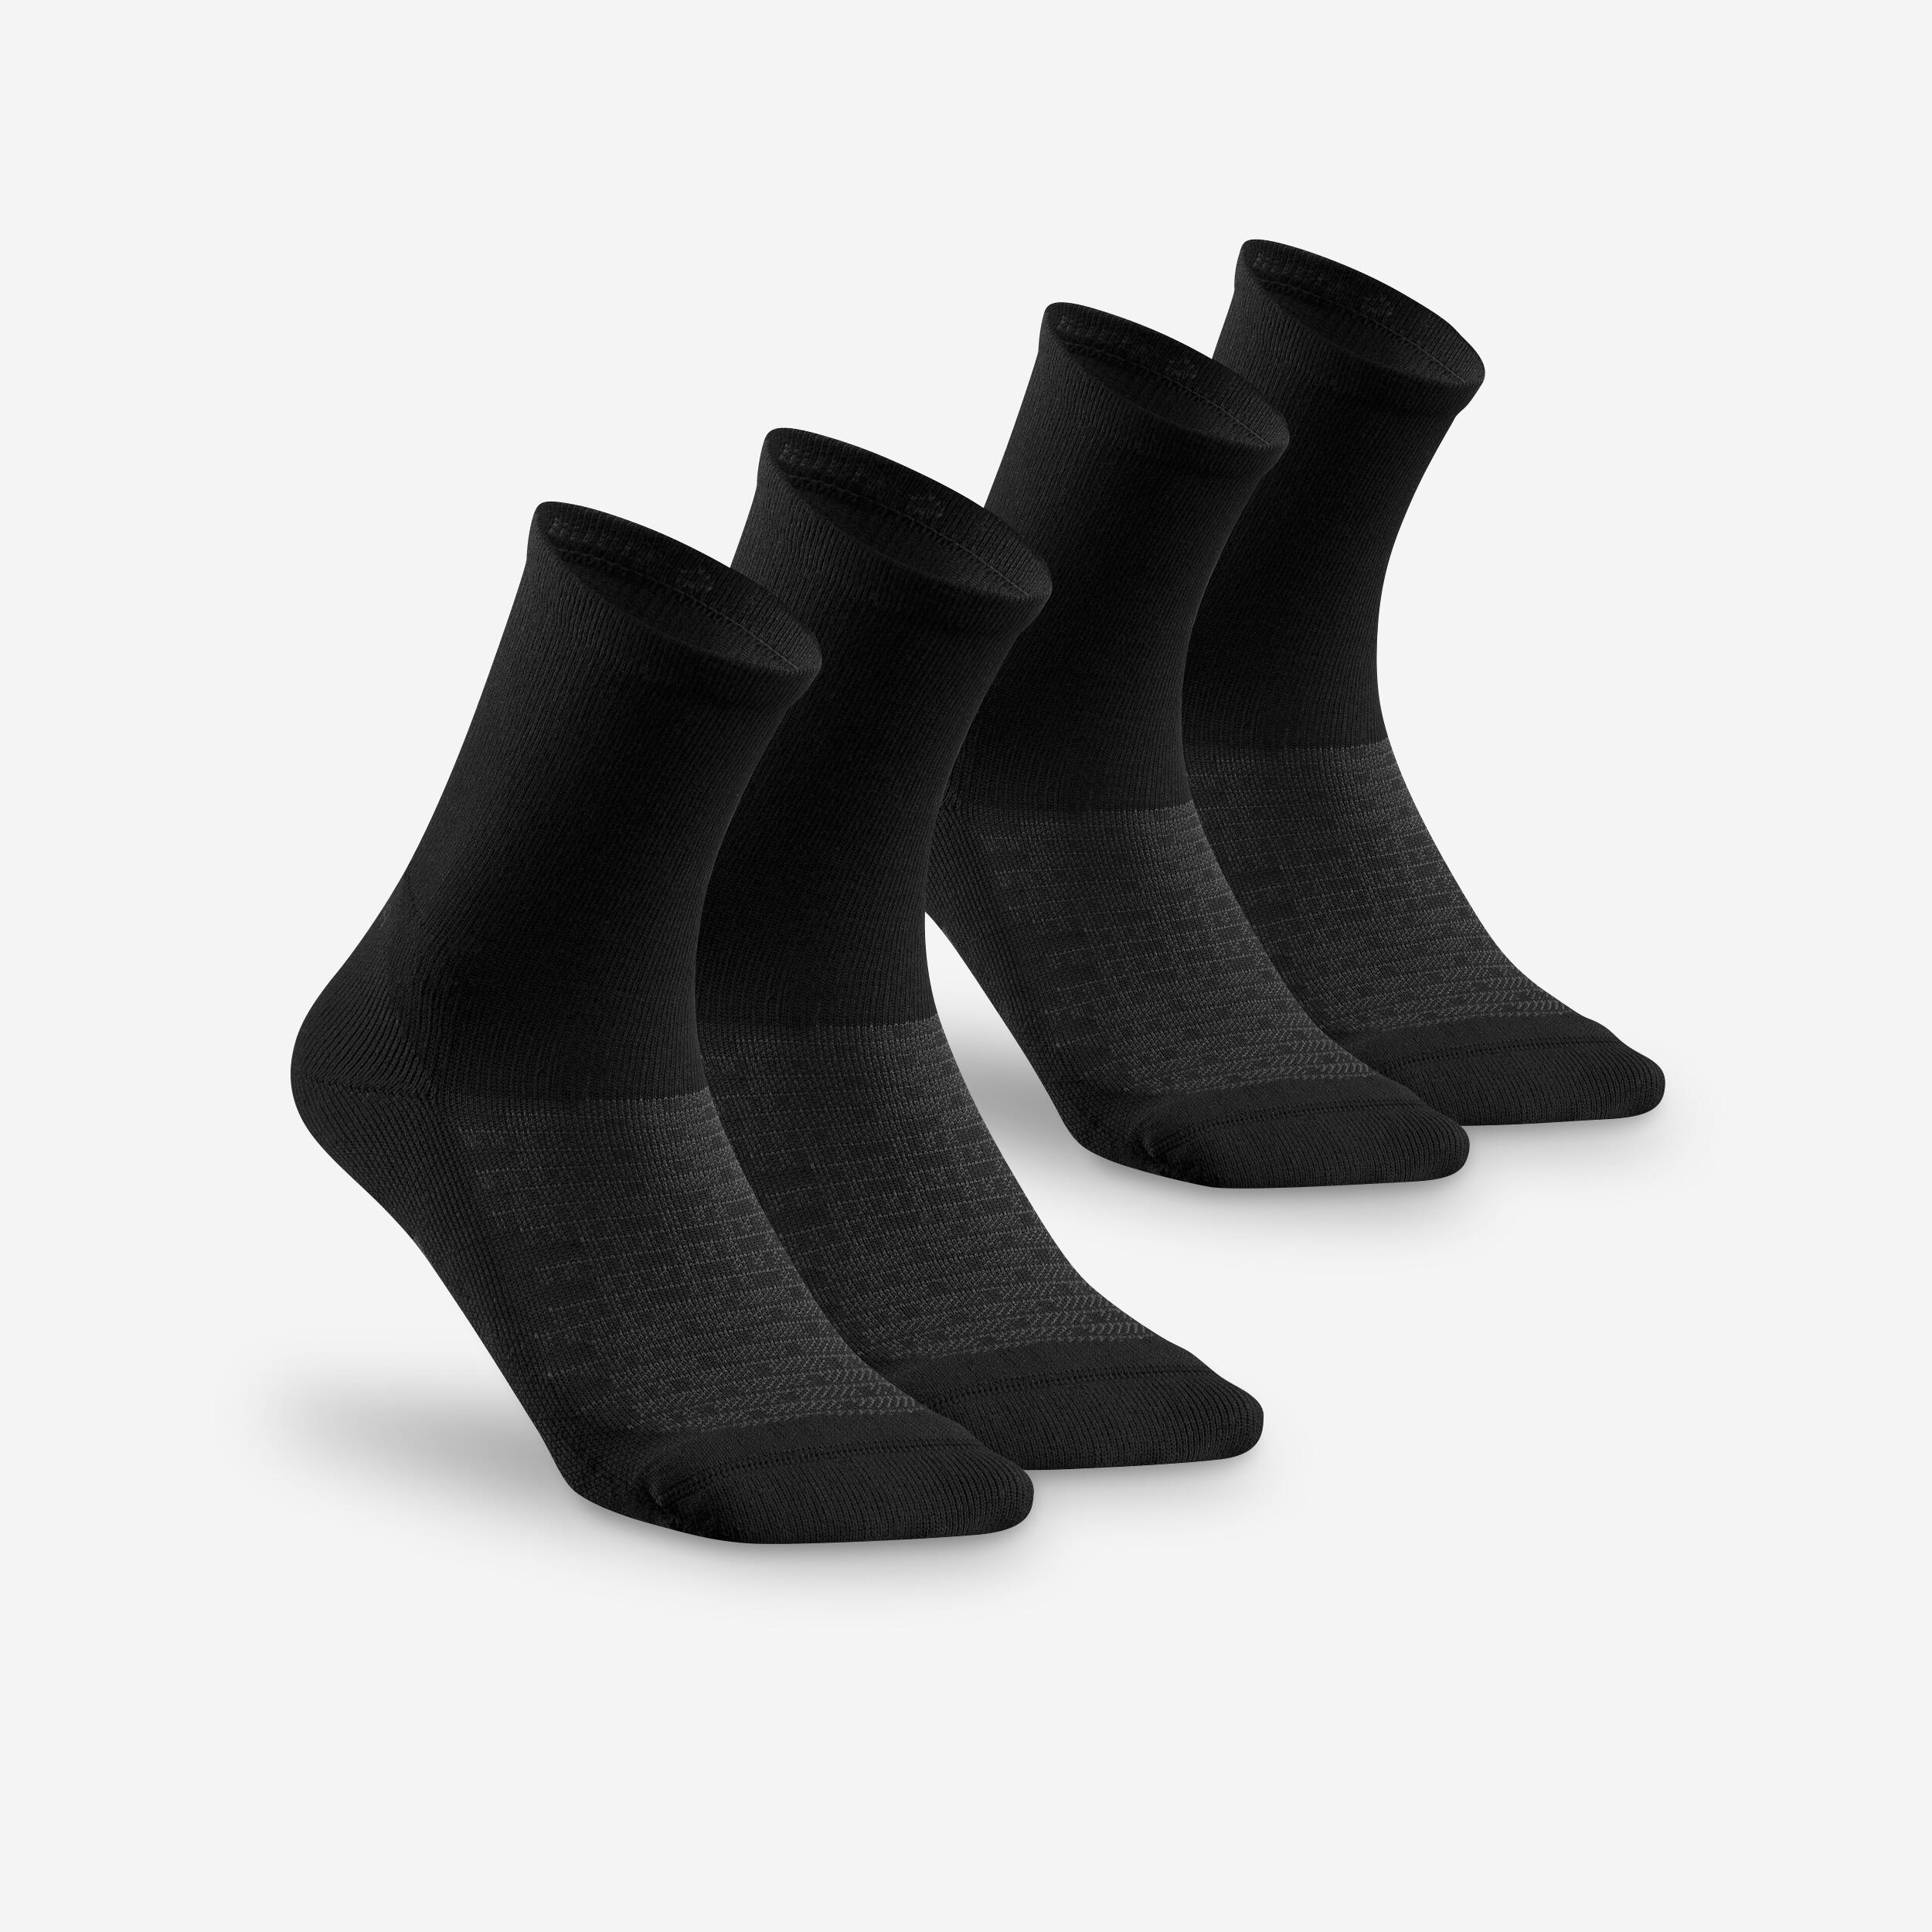 Mountain Hiking High Socks 2 Pairs 100 - Black